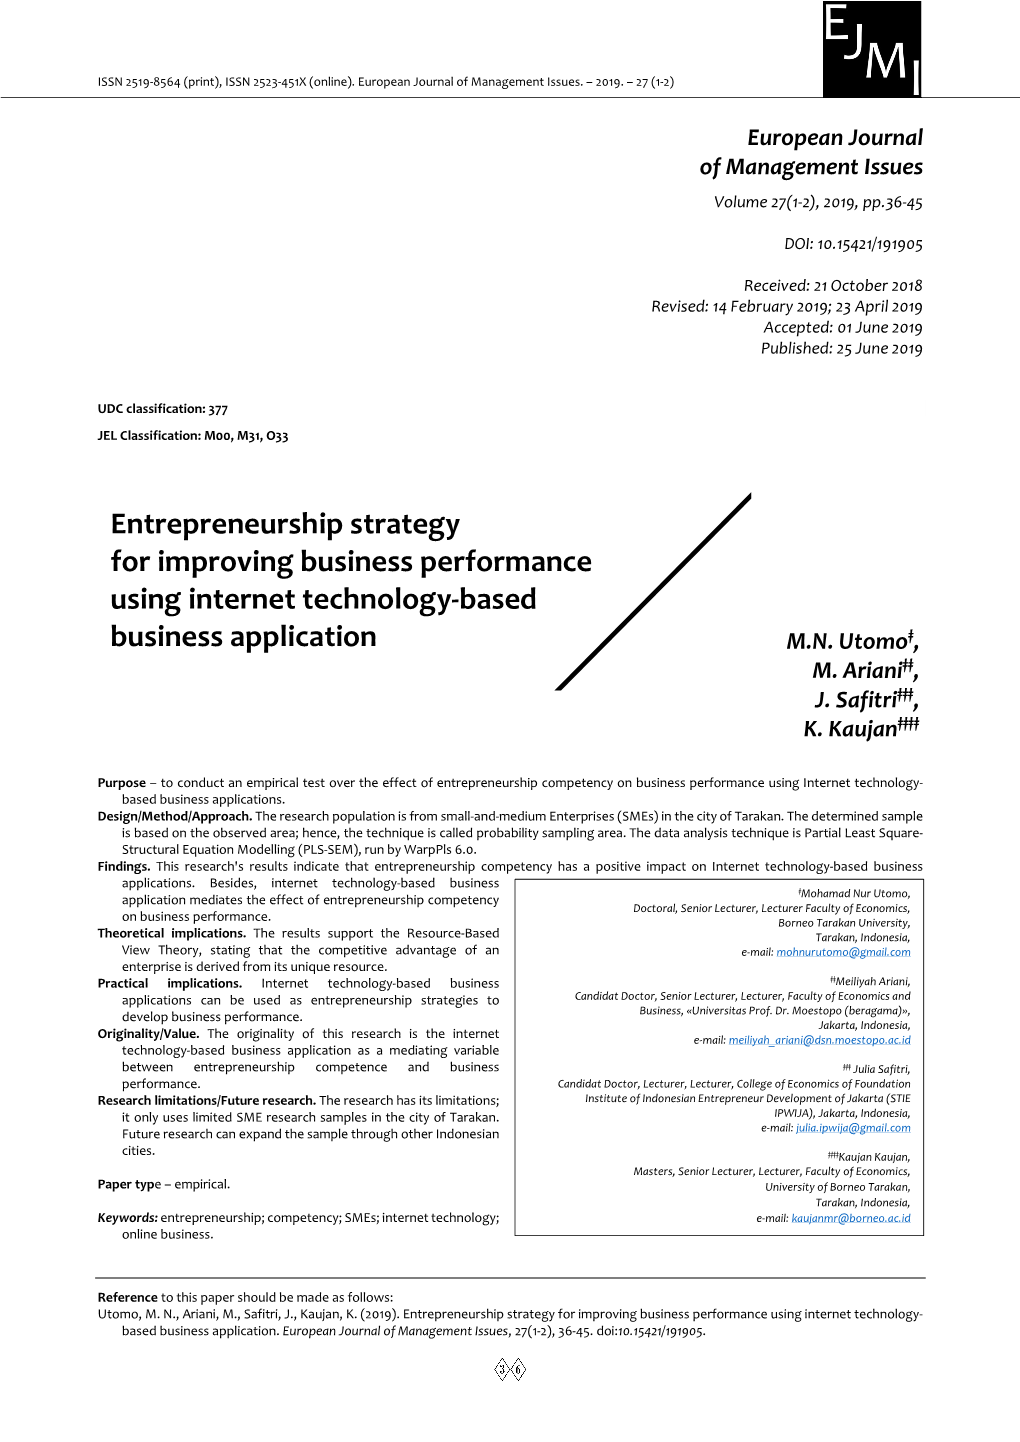 Entrepreneurship Strategy for Improving Business Performance Using Internet Technology-Based